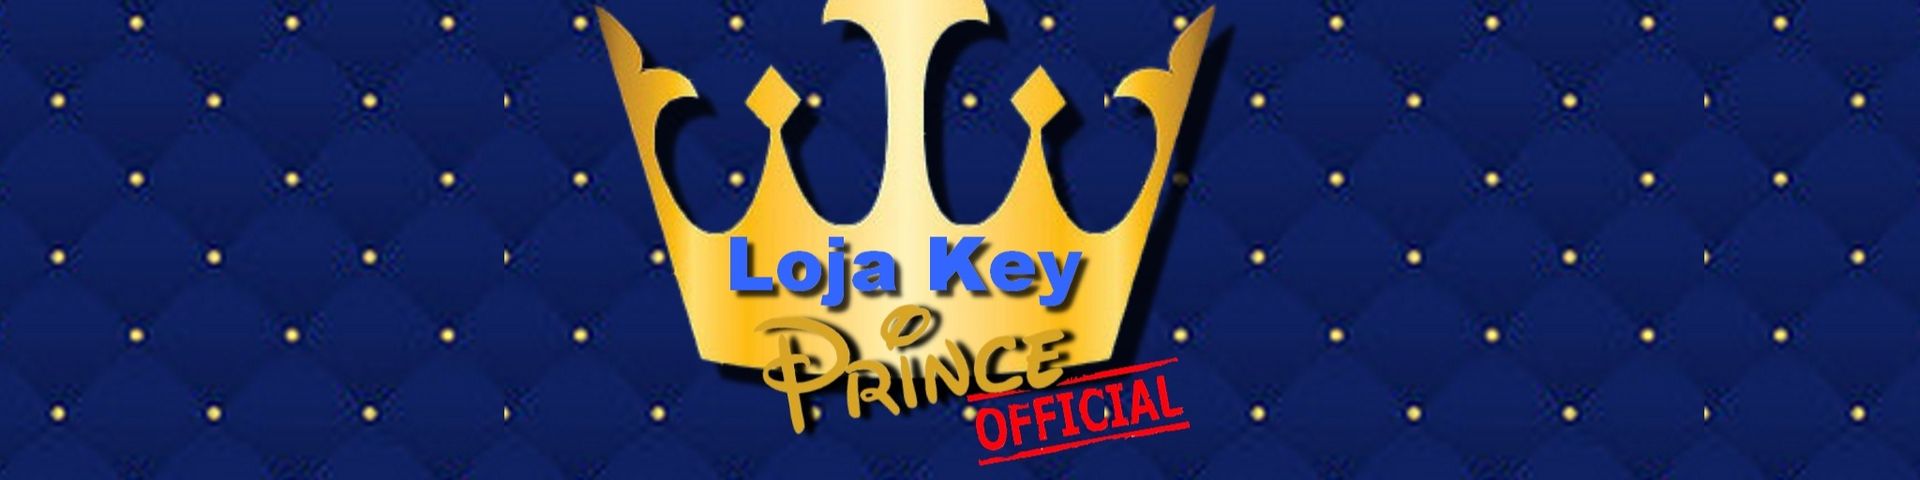 Nome da loja  Loja Key Prince Official